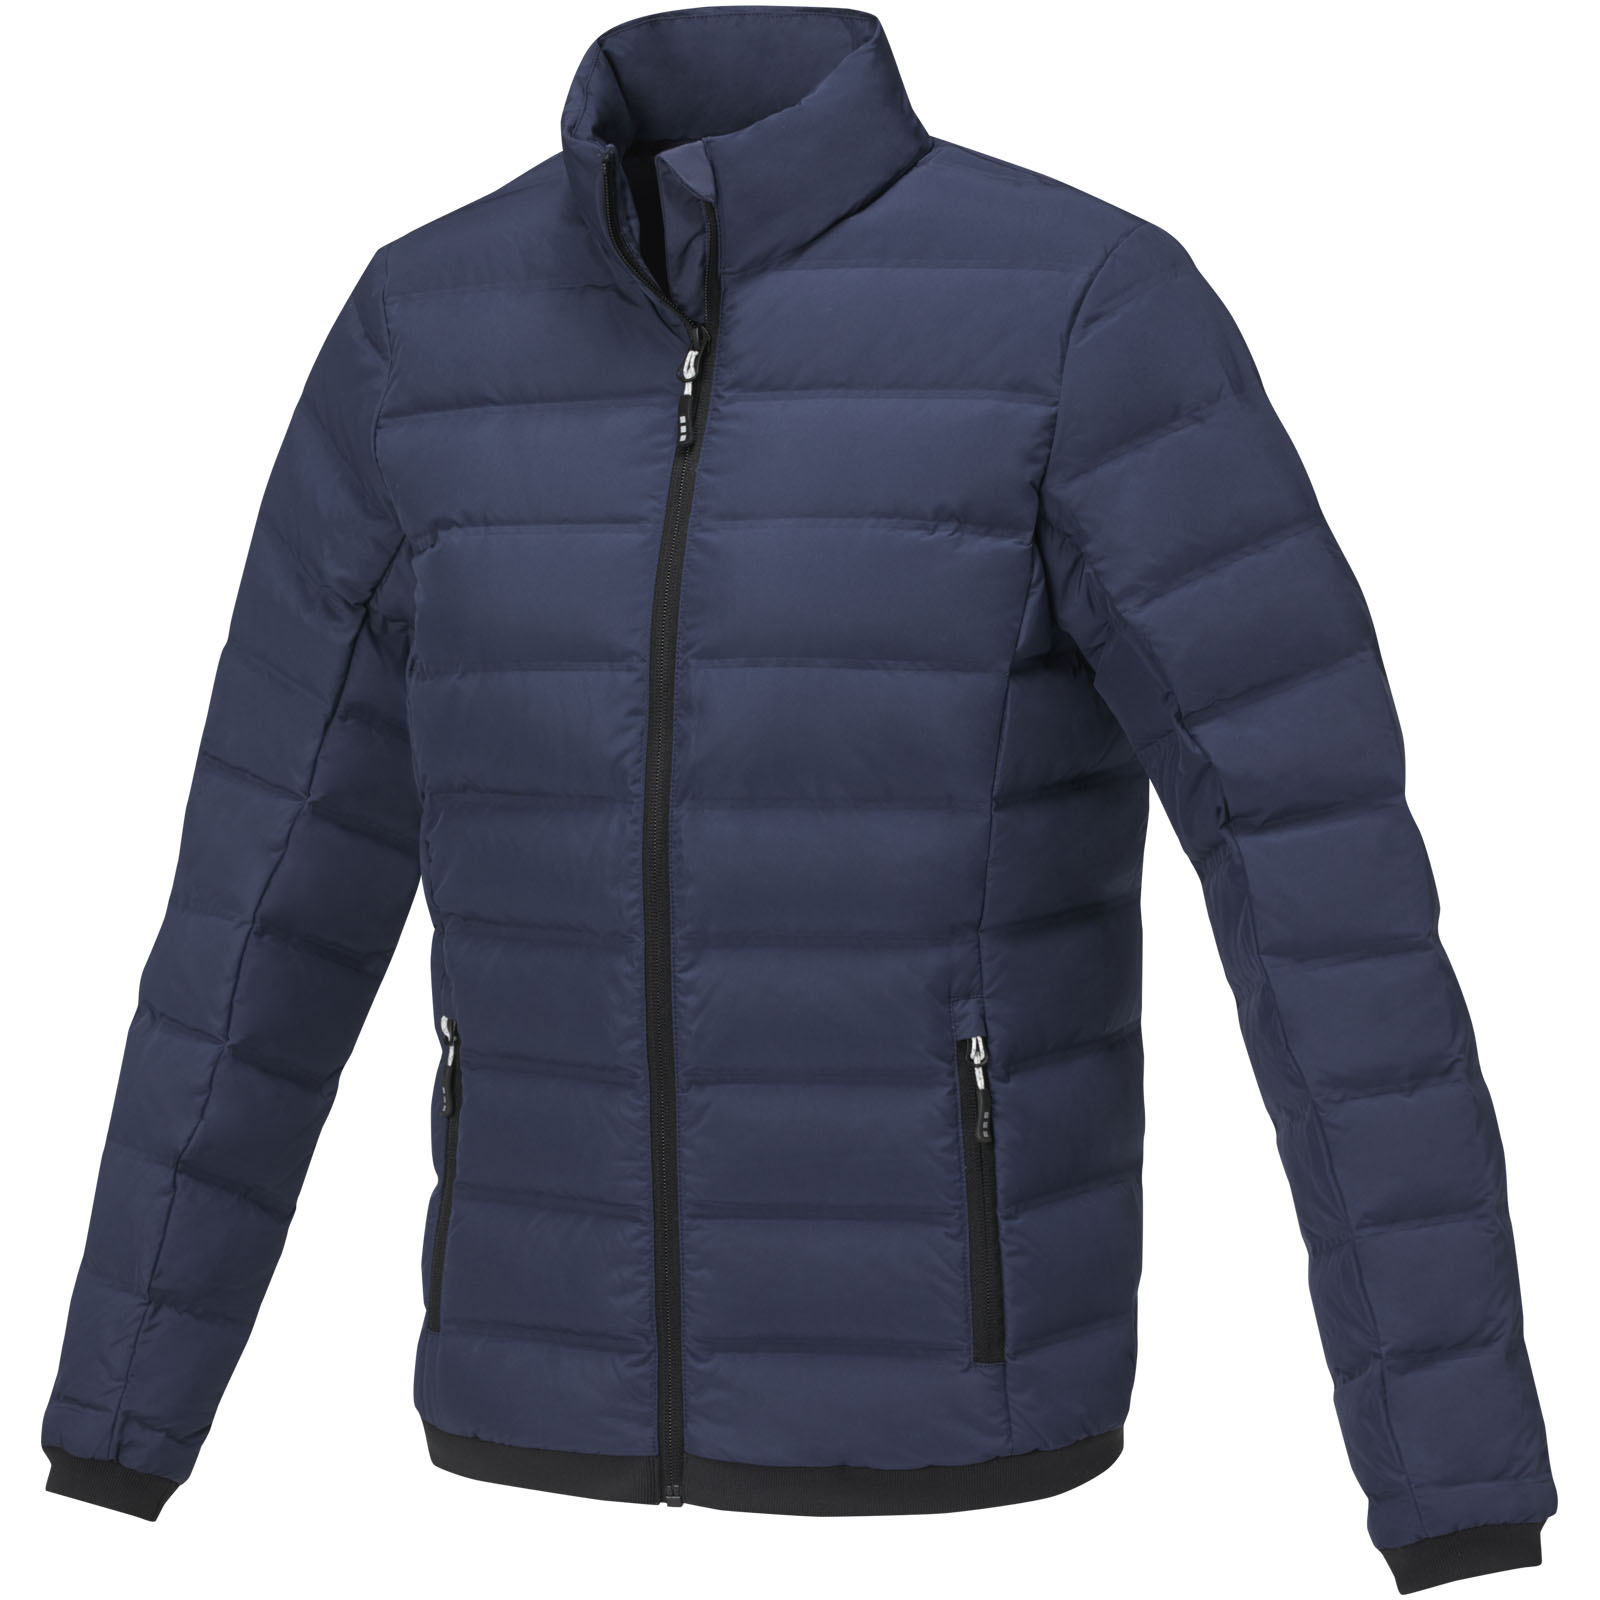 Jackets - Macin women's insulated down jacket